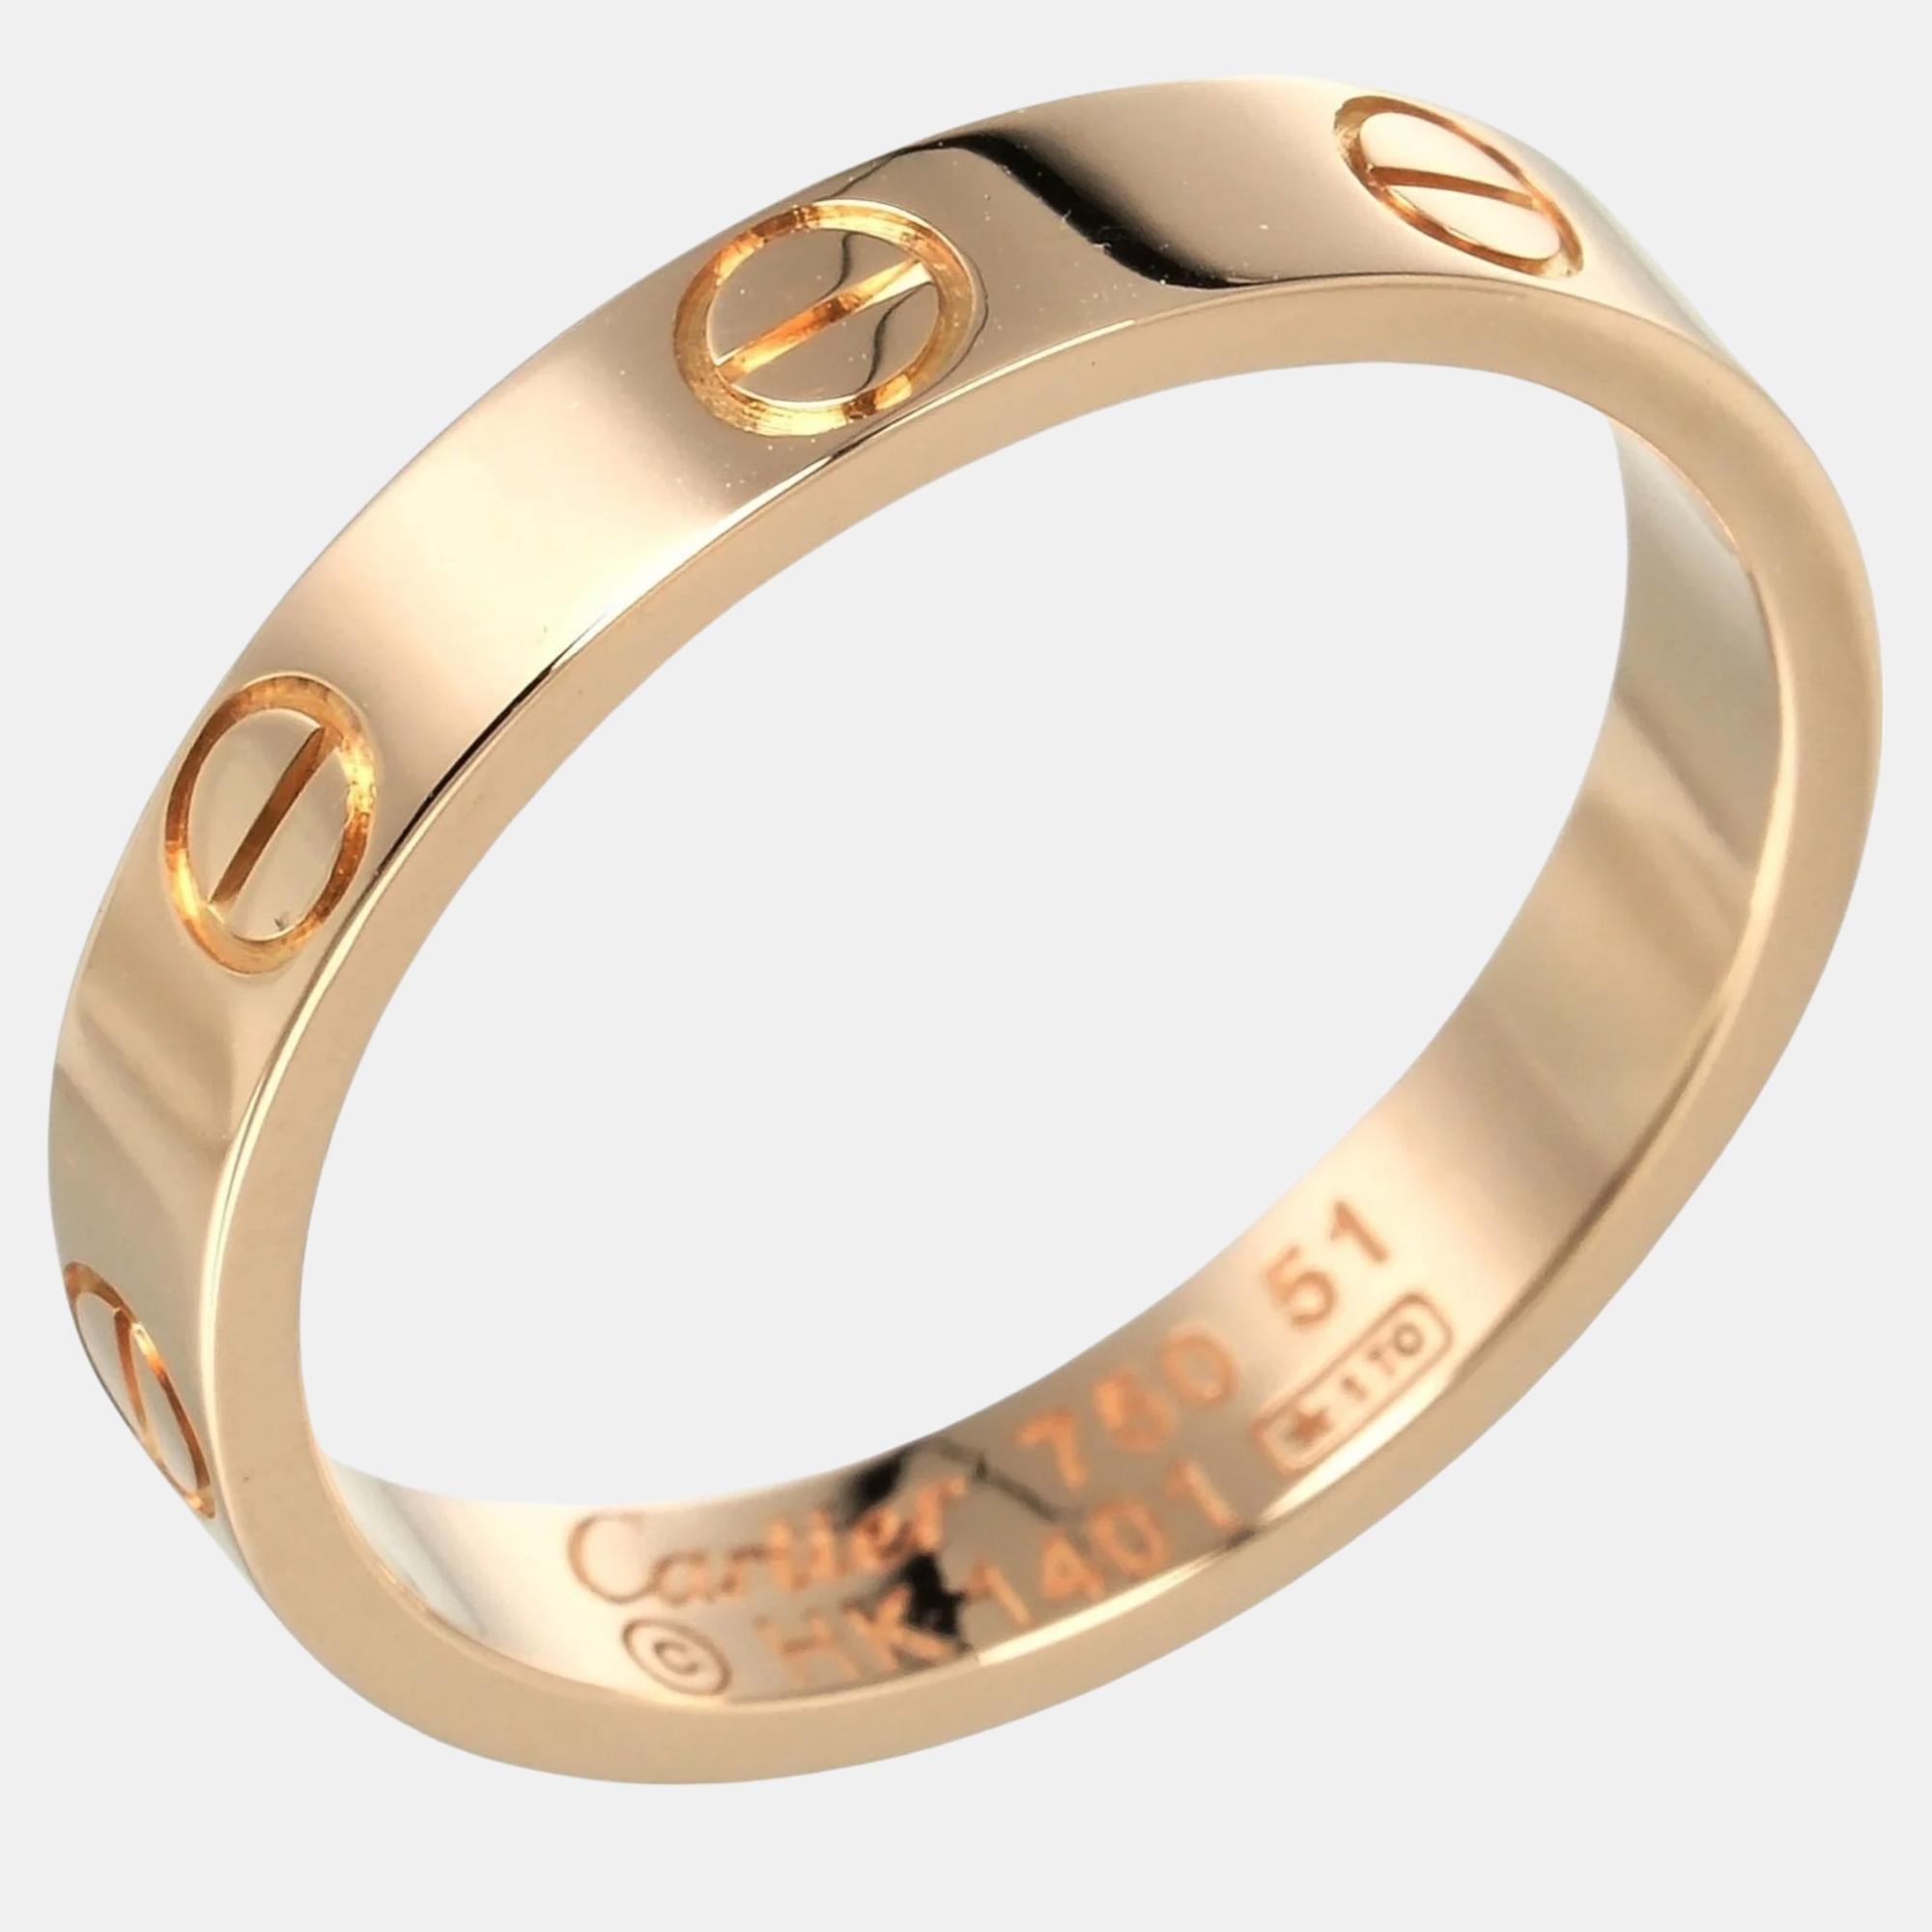 

Cartier 18K Rose Gold Love Band Ring EU 51